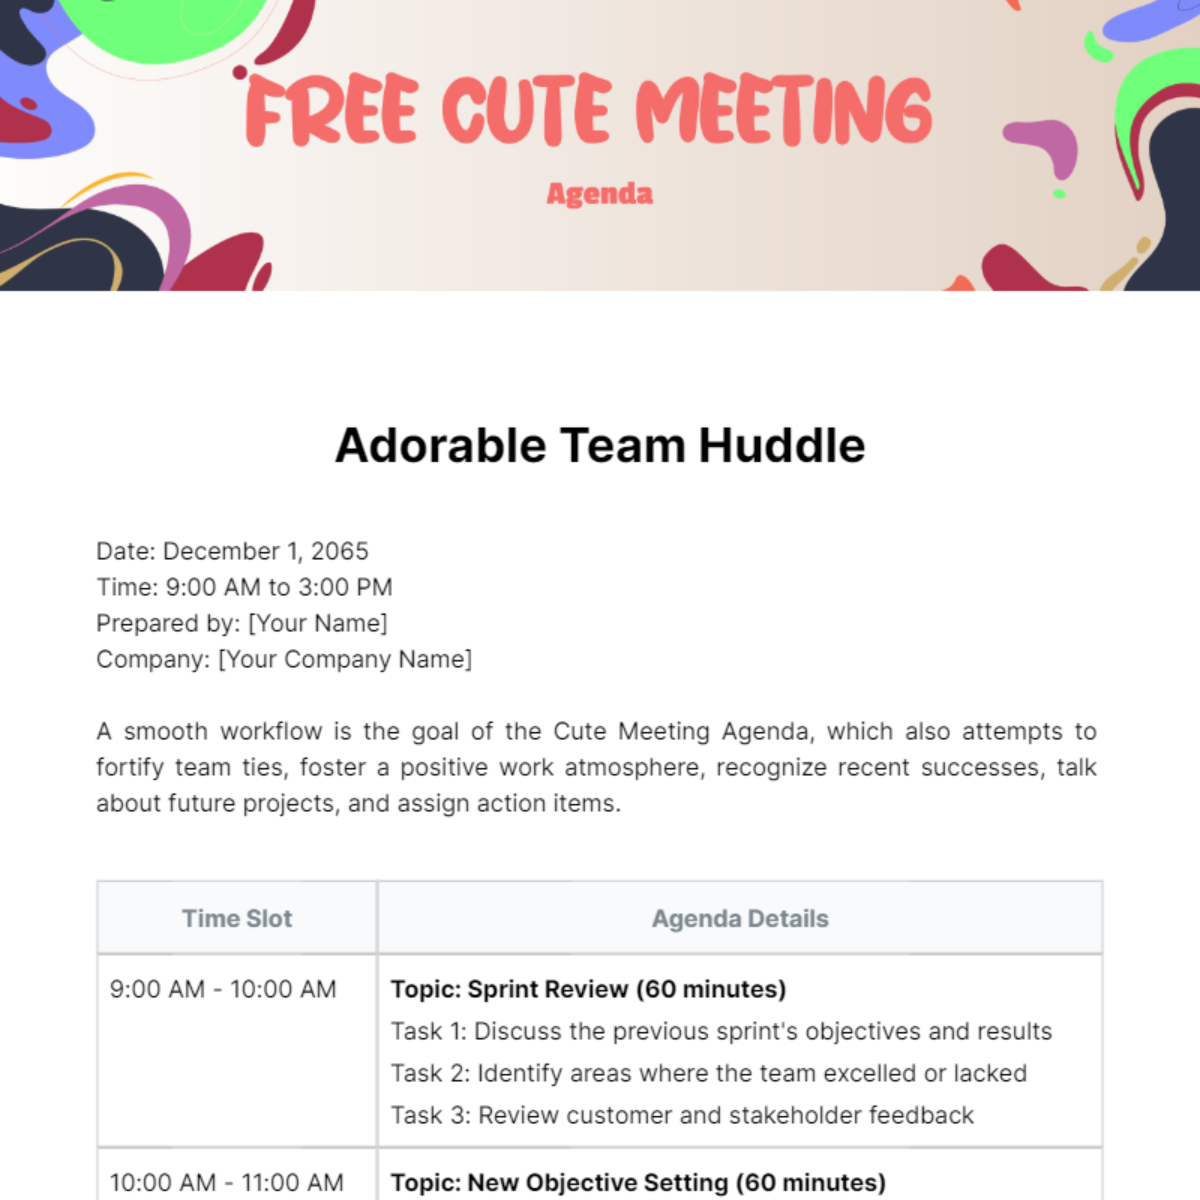 Free Cute Meeting Agenda Template